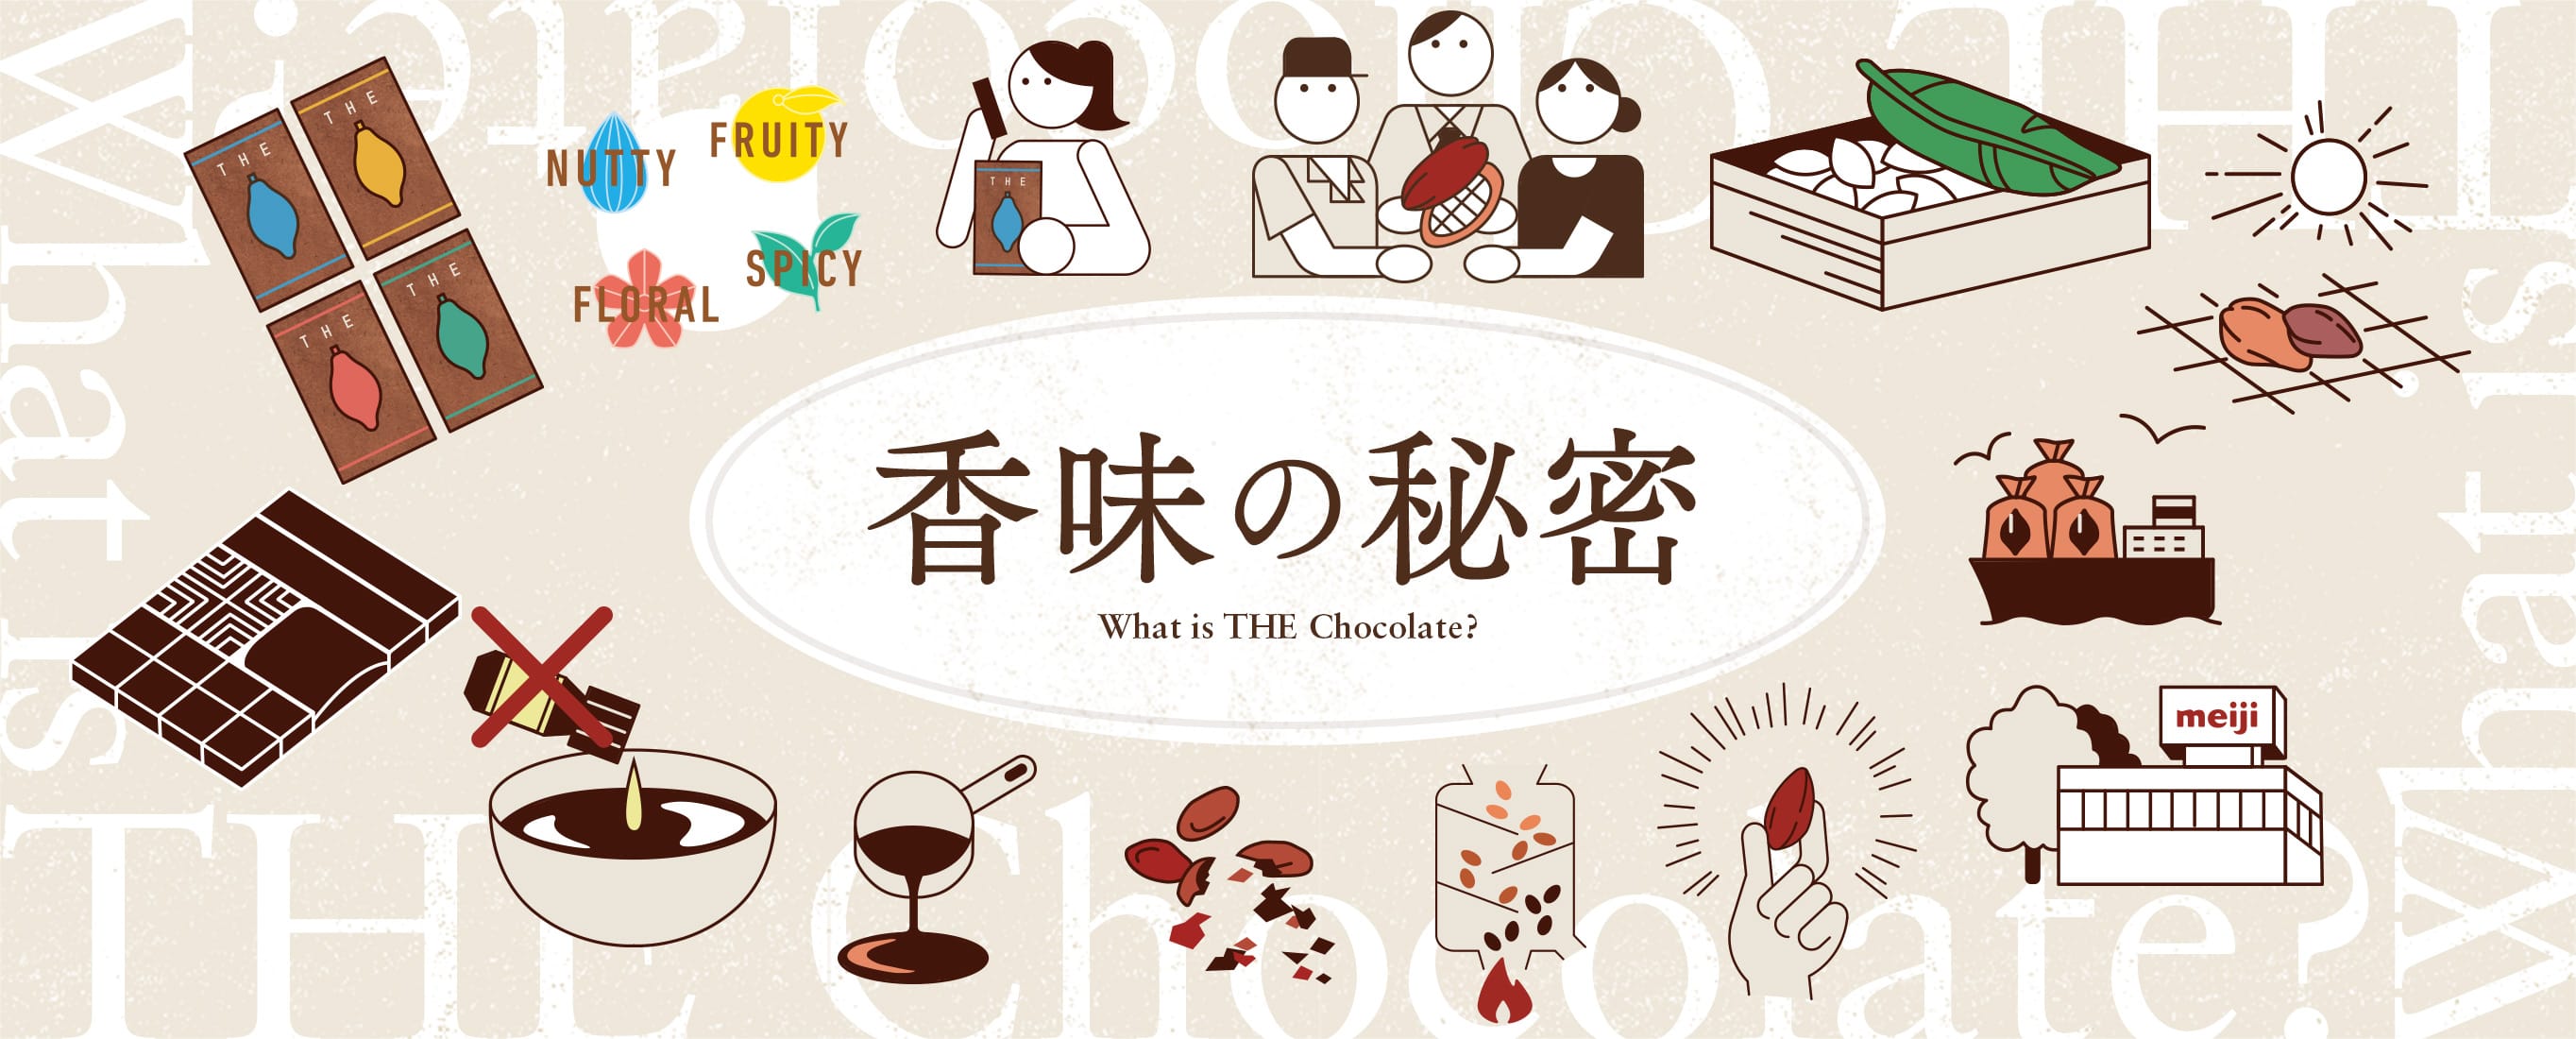 Meiji The Chocolate 明治 ザ チョコレート 株式会社 明治 Meiji Co Ltd